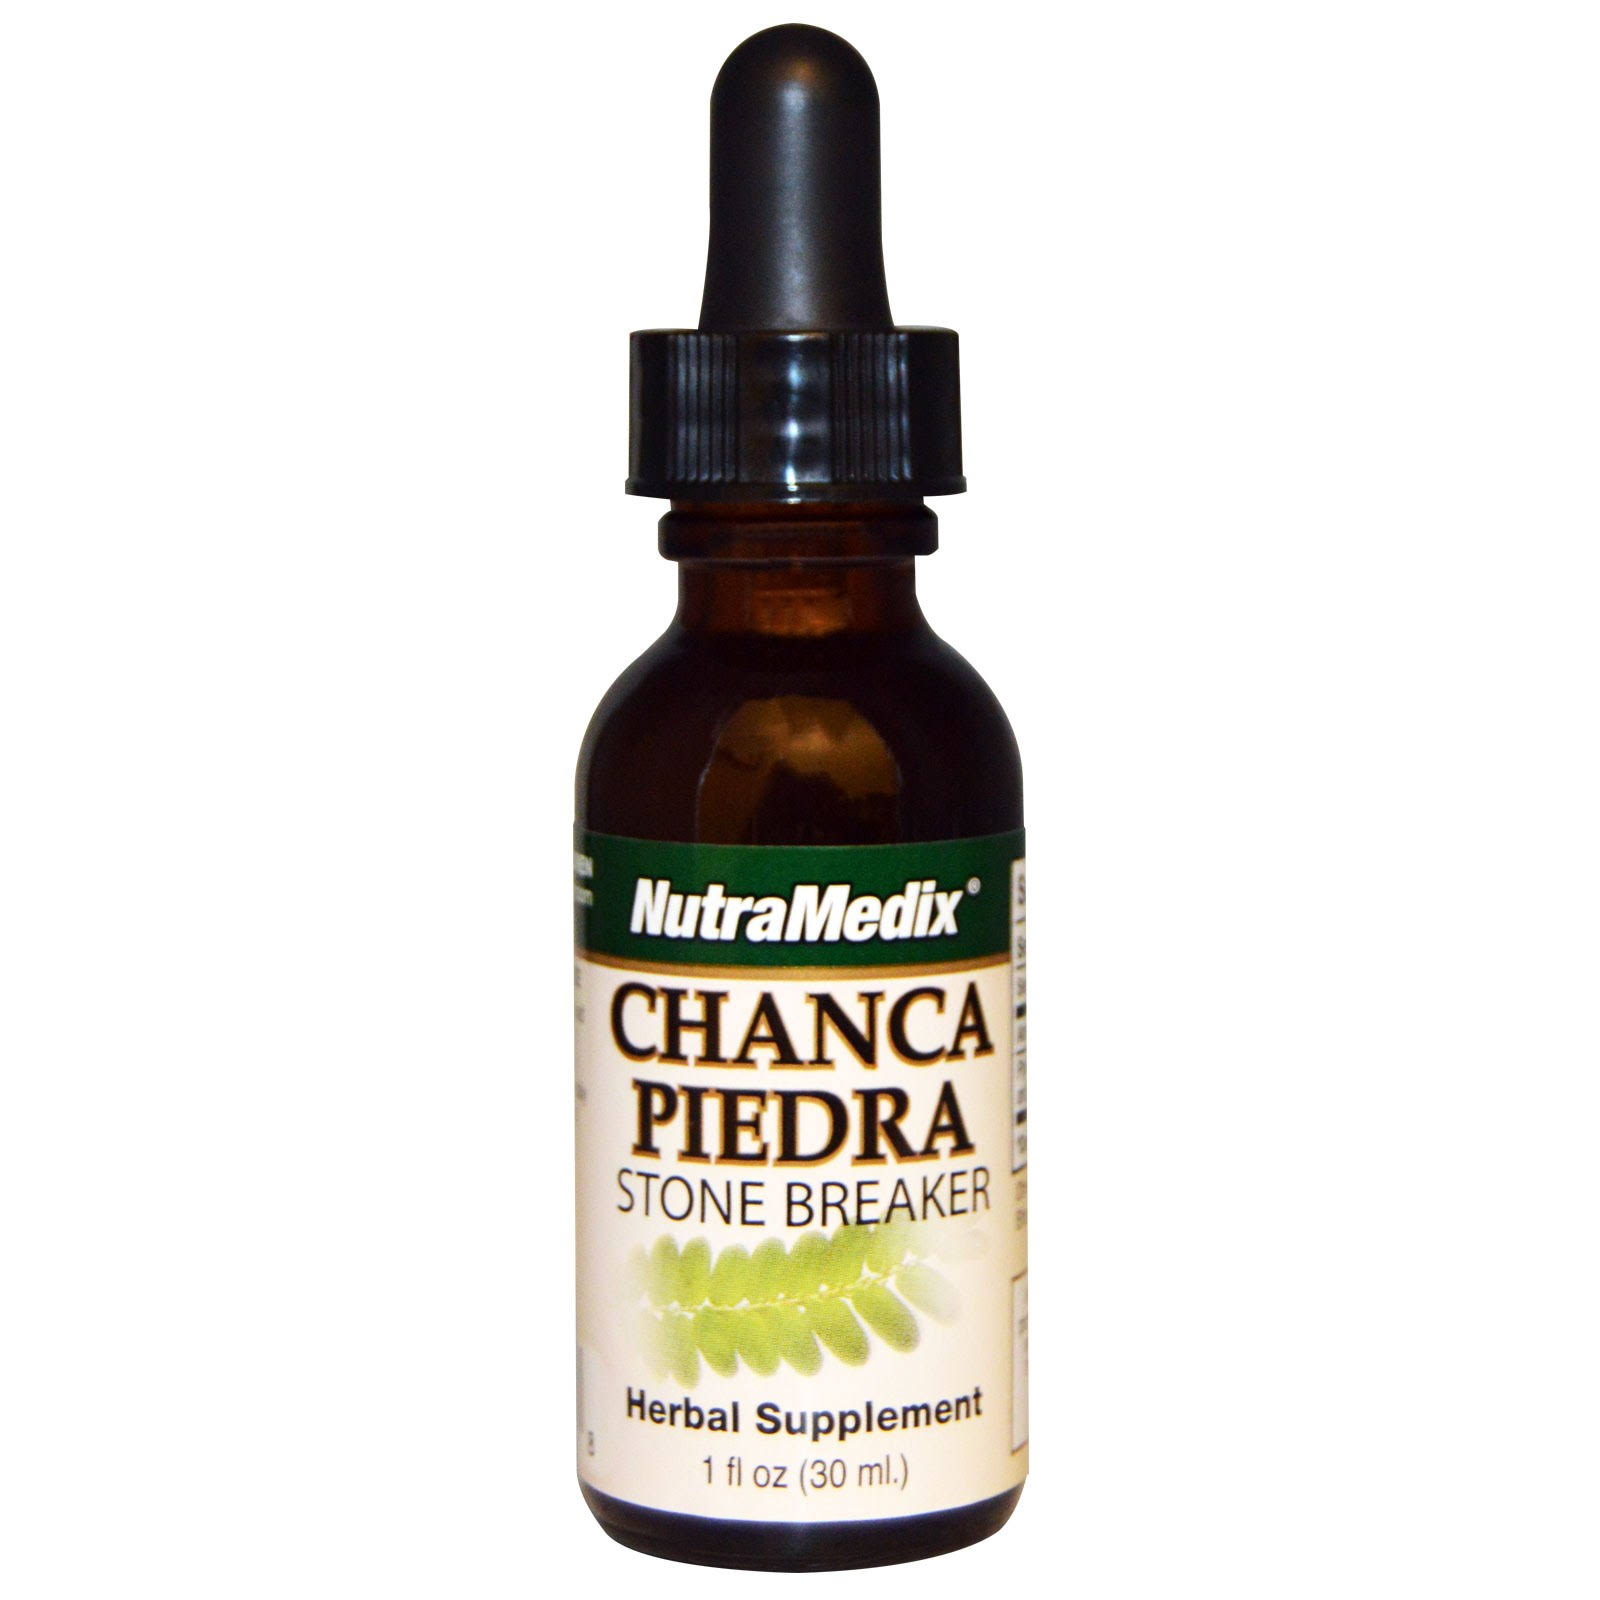 Nutramedix Chanca Piedra Stone Breaker Herbal Supplement - 30ml